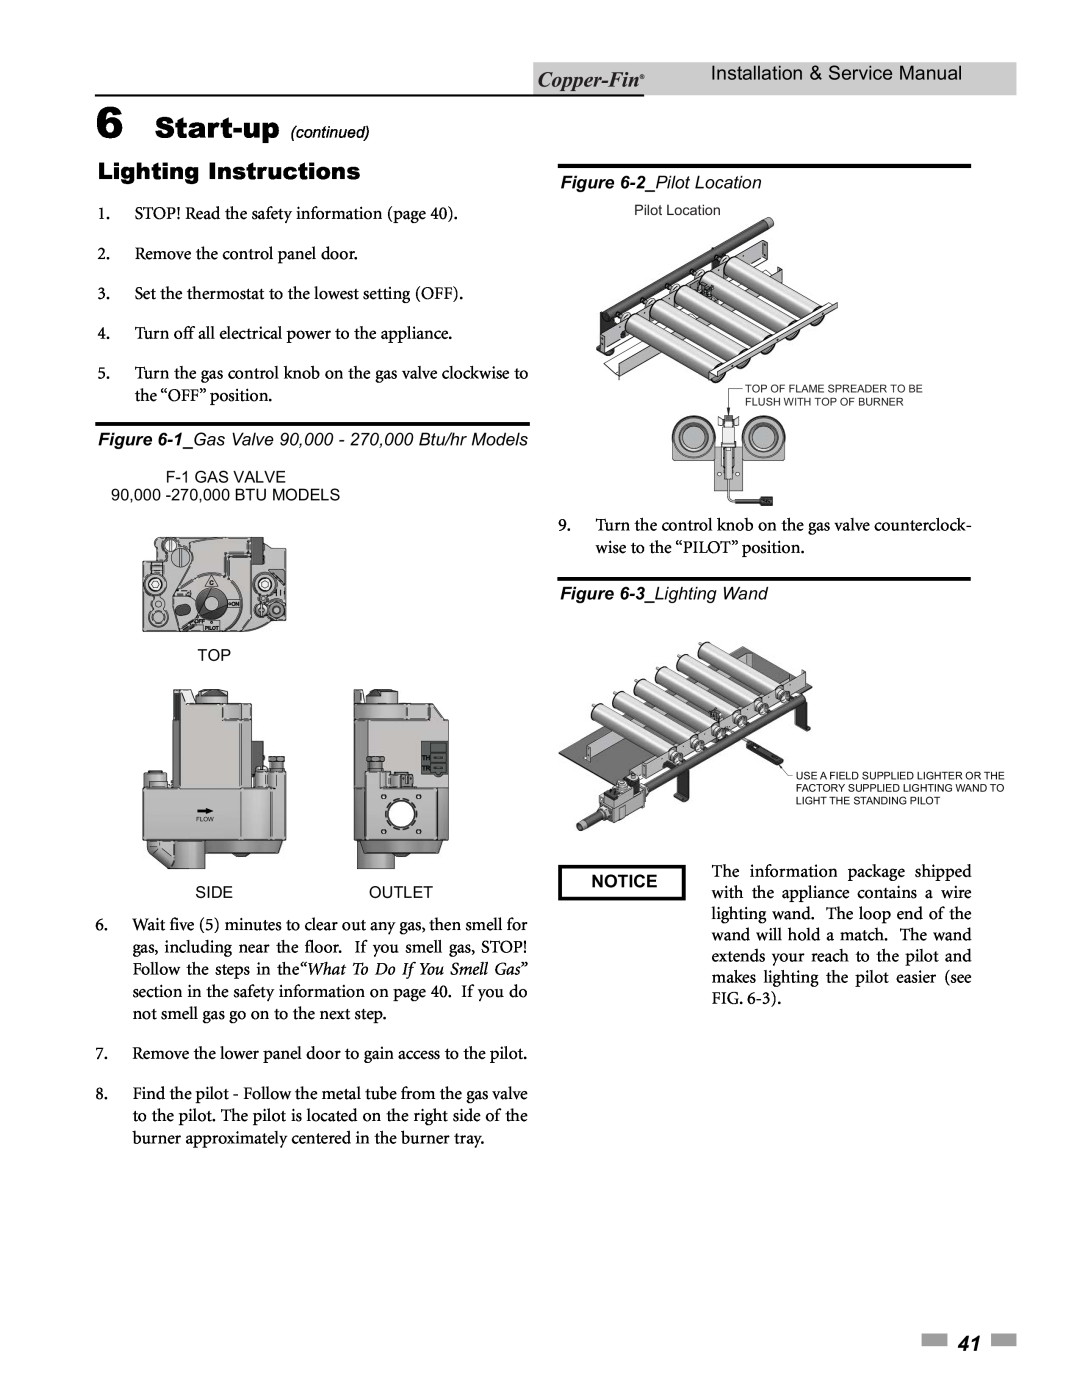 Lochinvar 90, 500 Lighting Instructions, Installation & Service Manual, 2_PilotLocation, 3_LightingWand, Notice 